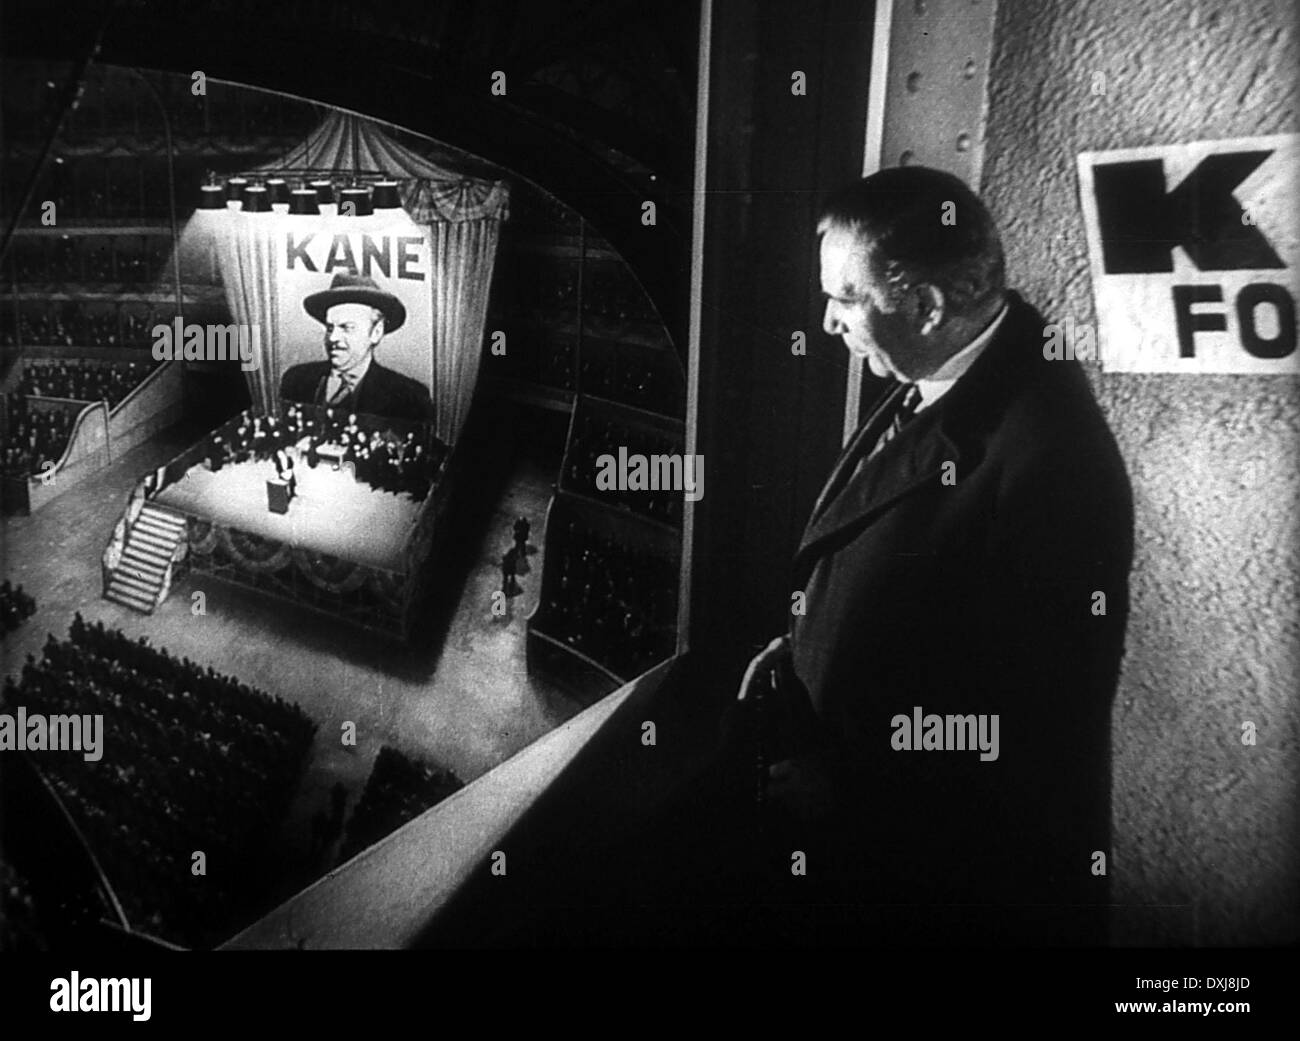 Kane Black and White Stock Photos & Images - Alamy